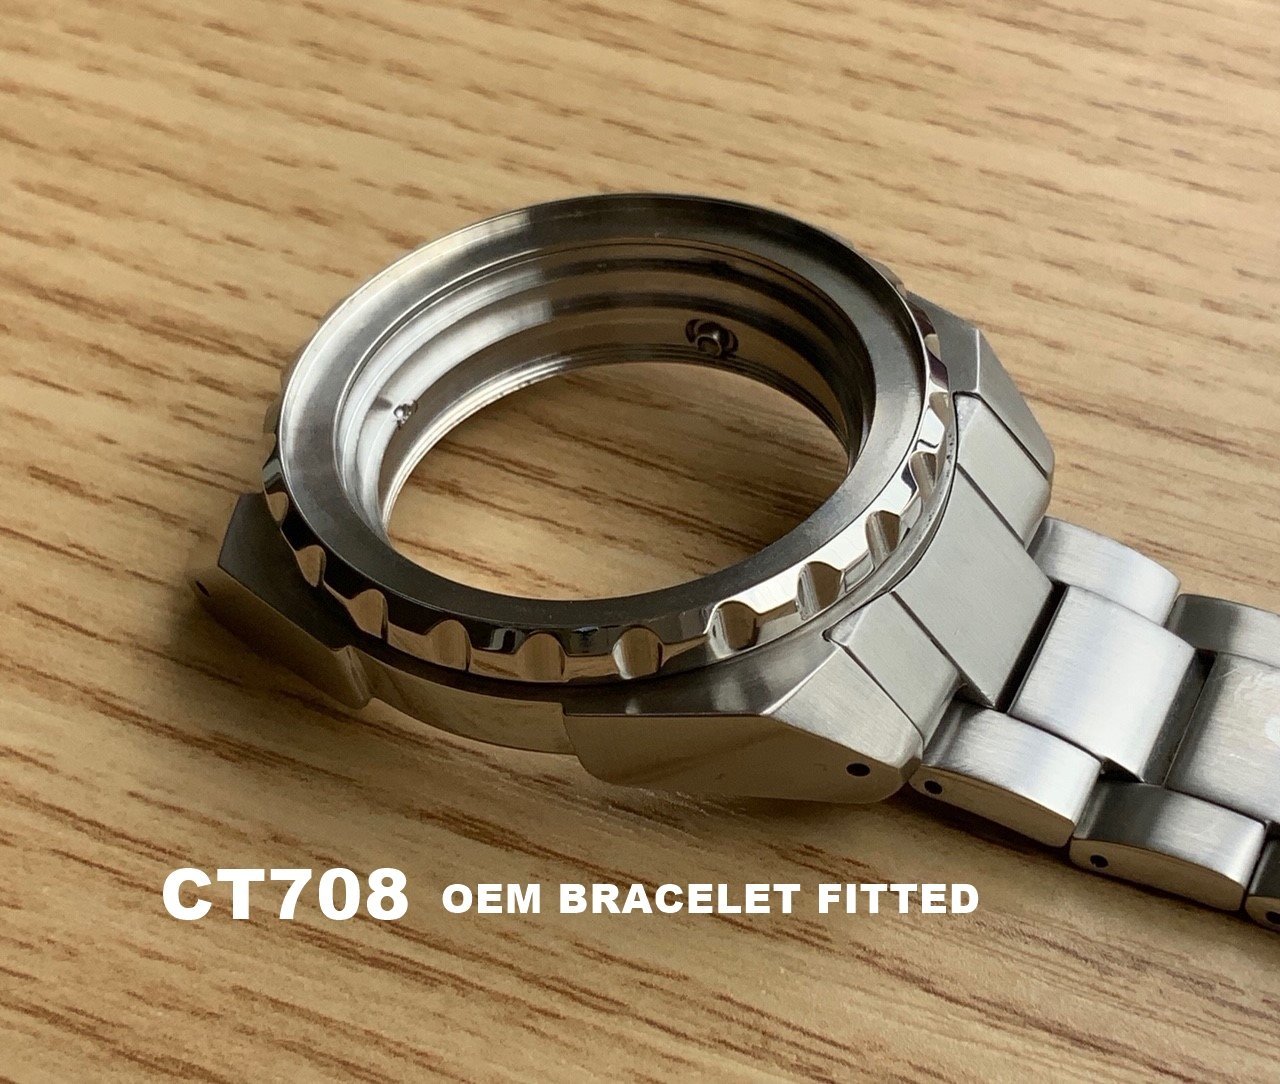 SKX007/SRPD Samurai Conversion Watch Case - CT708 Polished/Brushed -  Crystaltimes USA